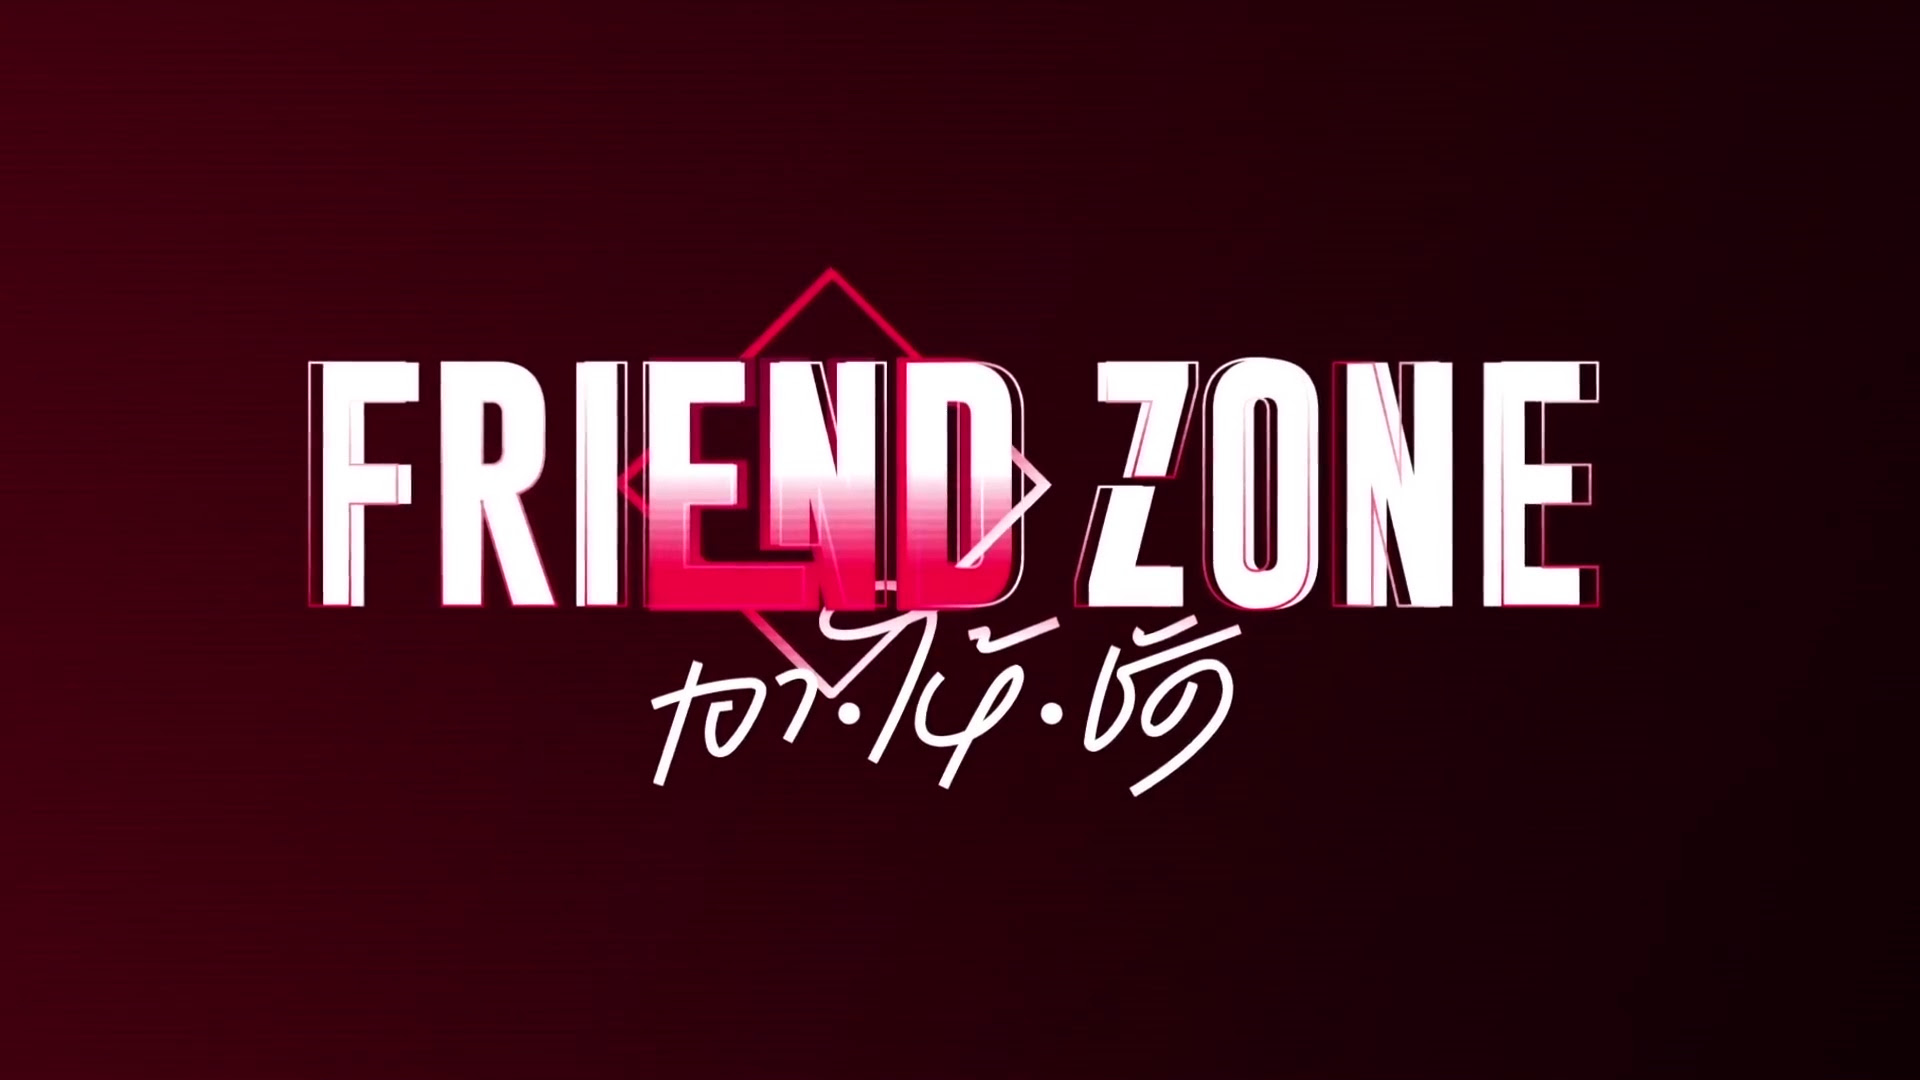 Friend zone (2019) menghabiskan biaya produksi sebesar $ 0,00 tetapi pengeluaran ini sebanding bila di lihat dari keuntungan yang di hasilkan sebesar $ 0,00. Bl Drama Thai Friend Zone